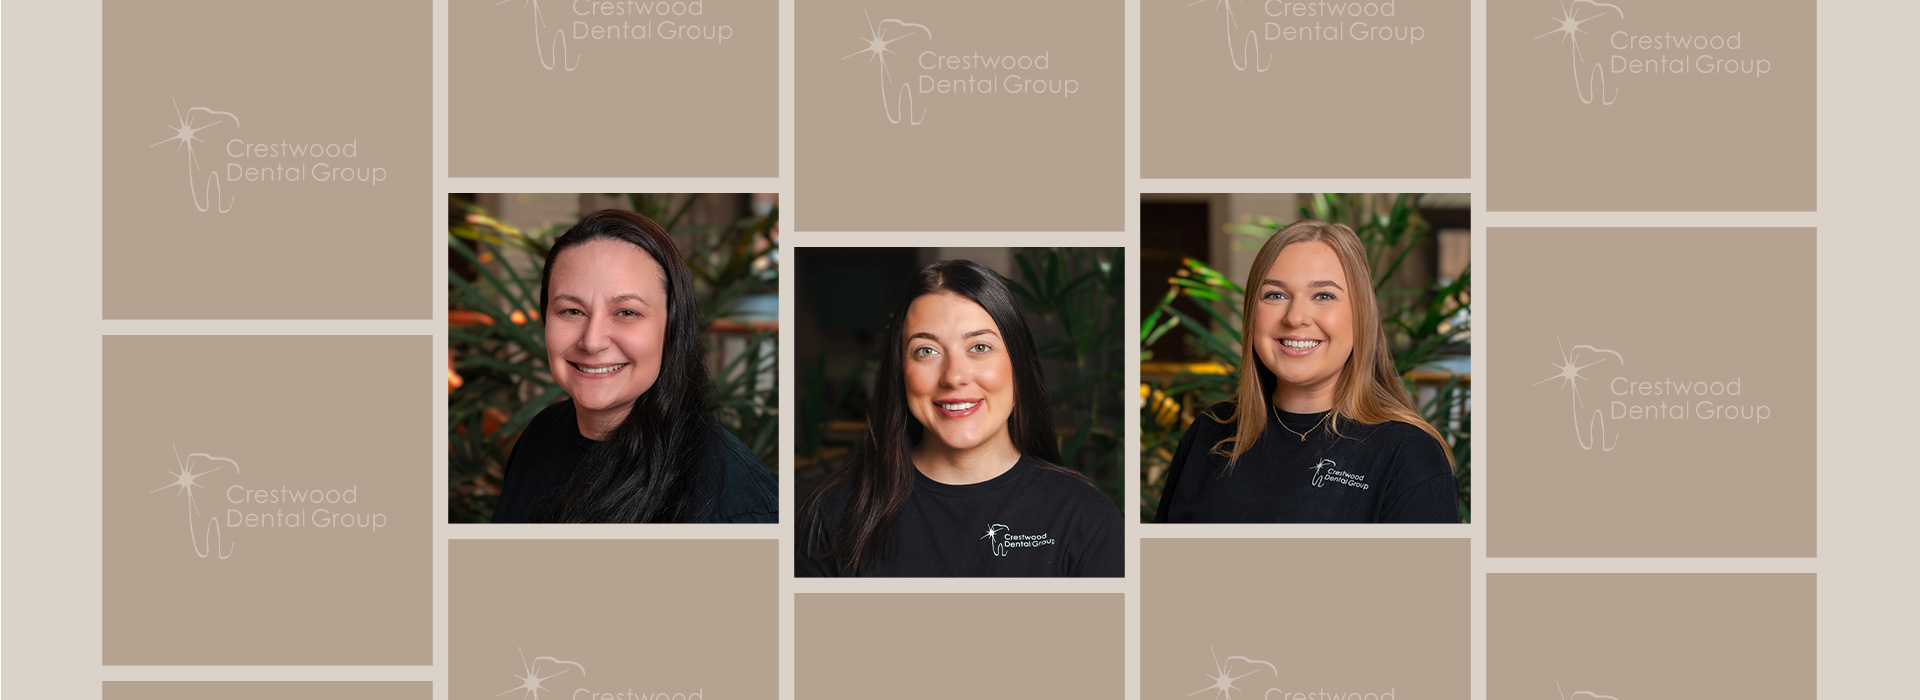 Meet the Team Crestwood Dental Group